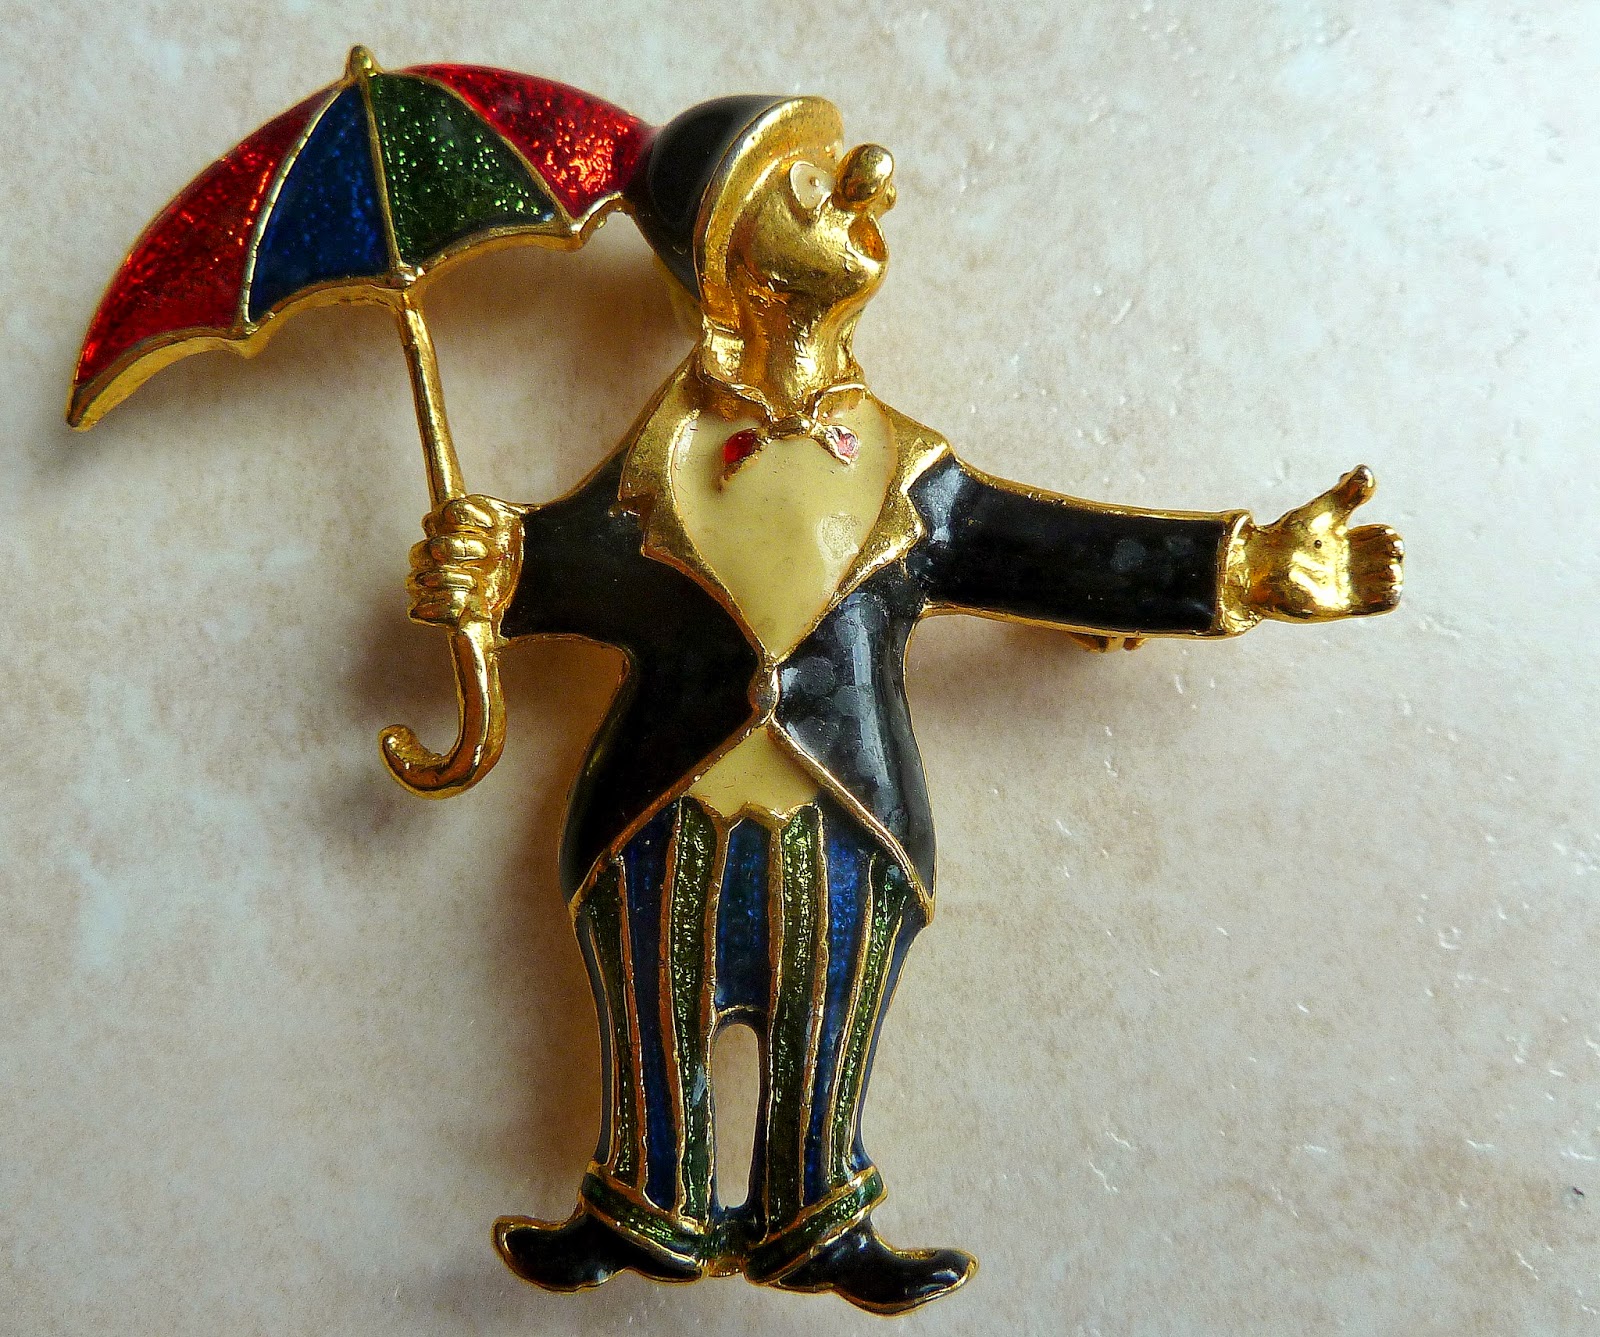 http://www.kcavintagegems.uk/vintage-clown-in-the-rain-brooch-132-p.asp